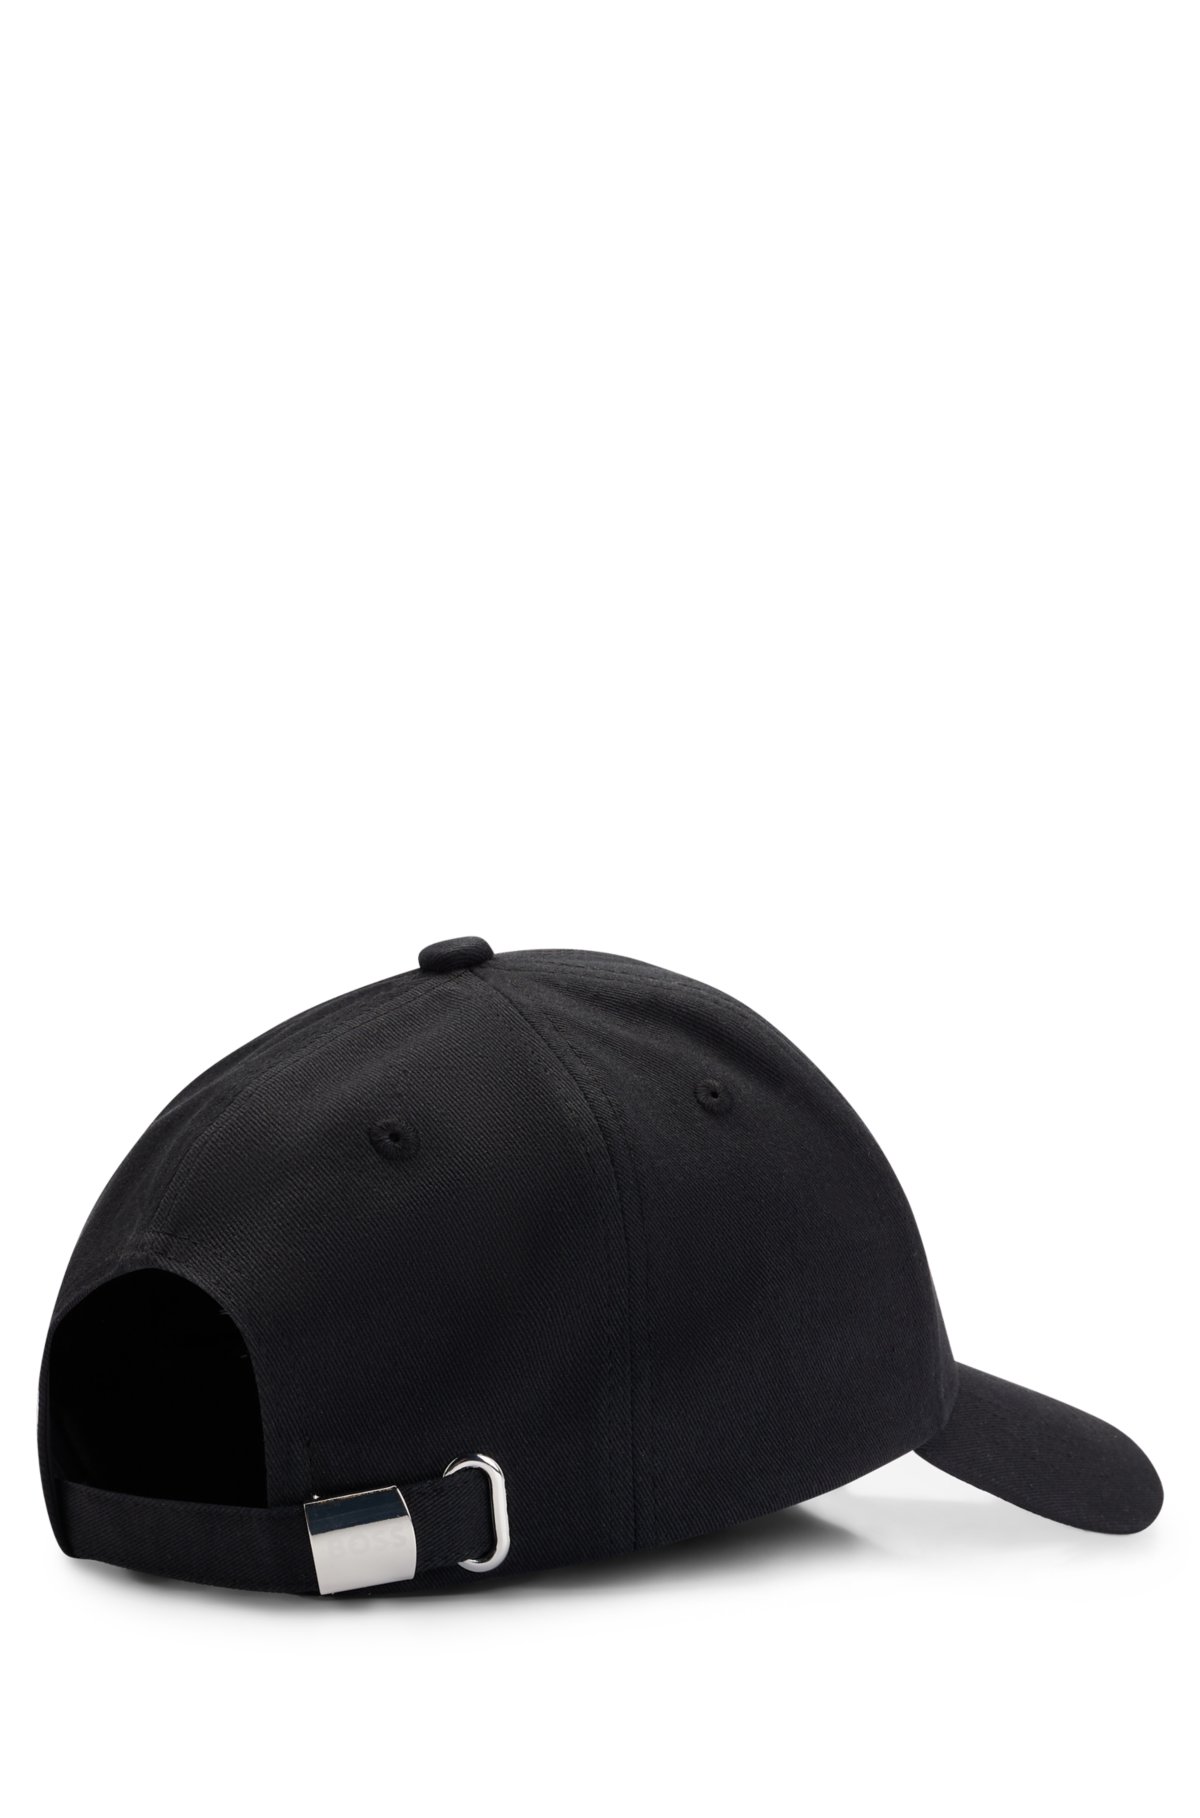 Cotton-twill cap with signature logo print, Black